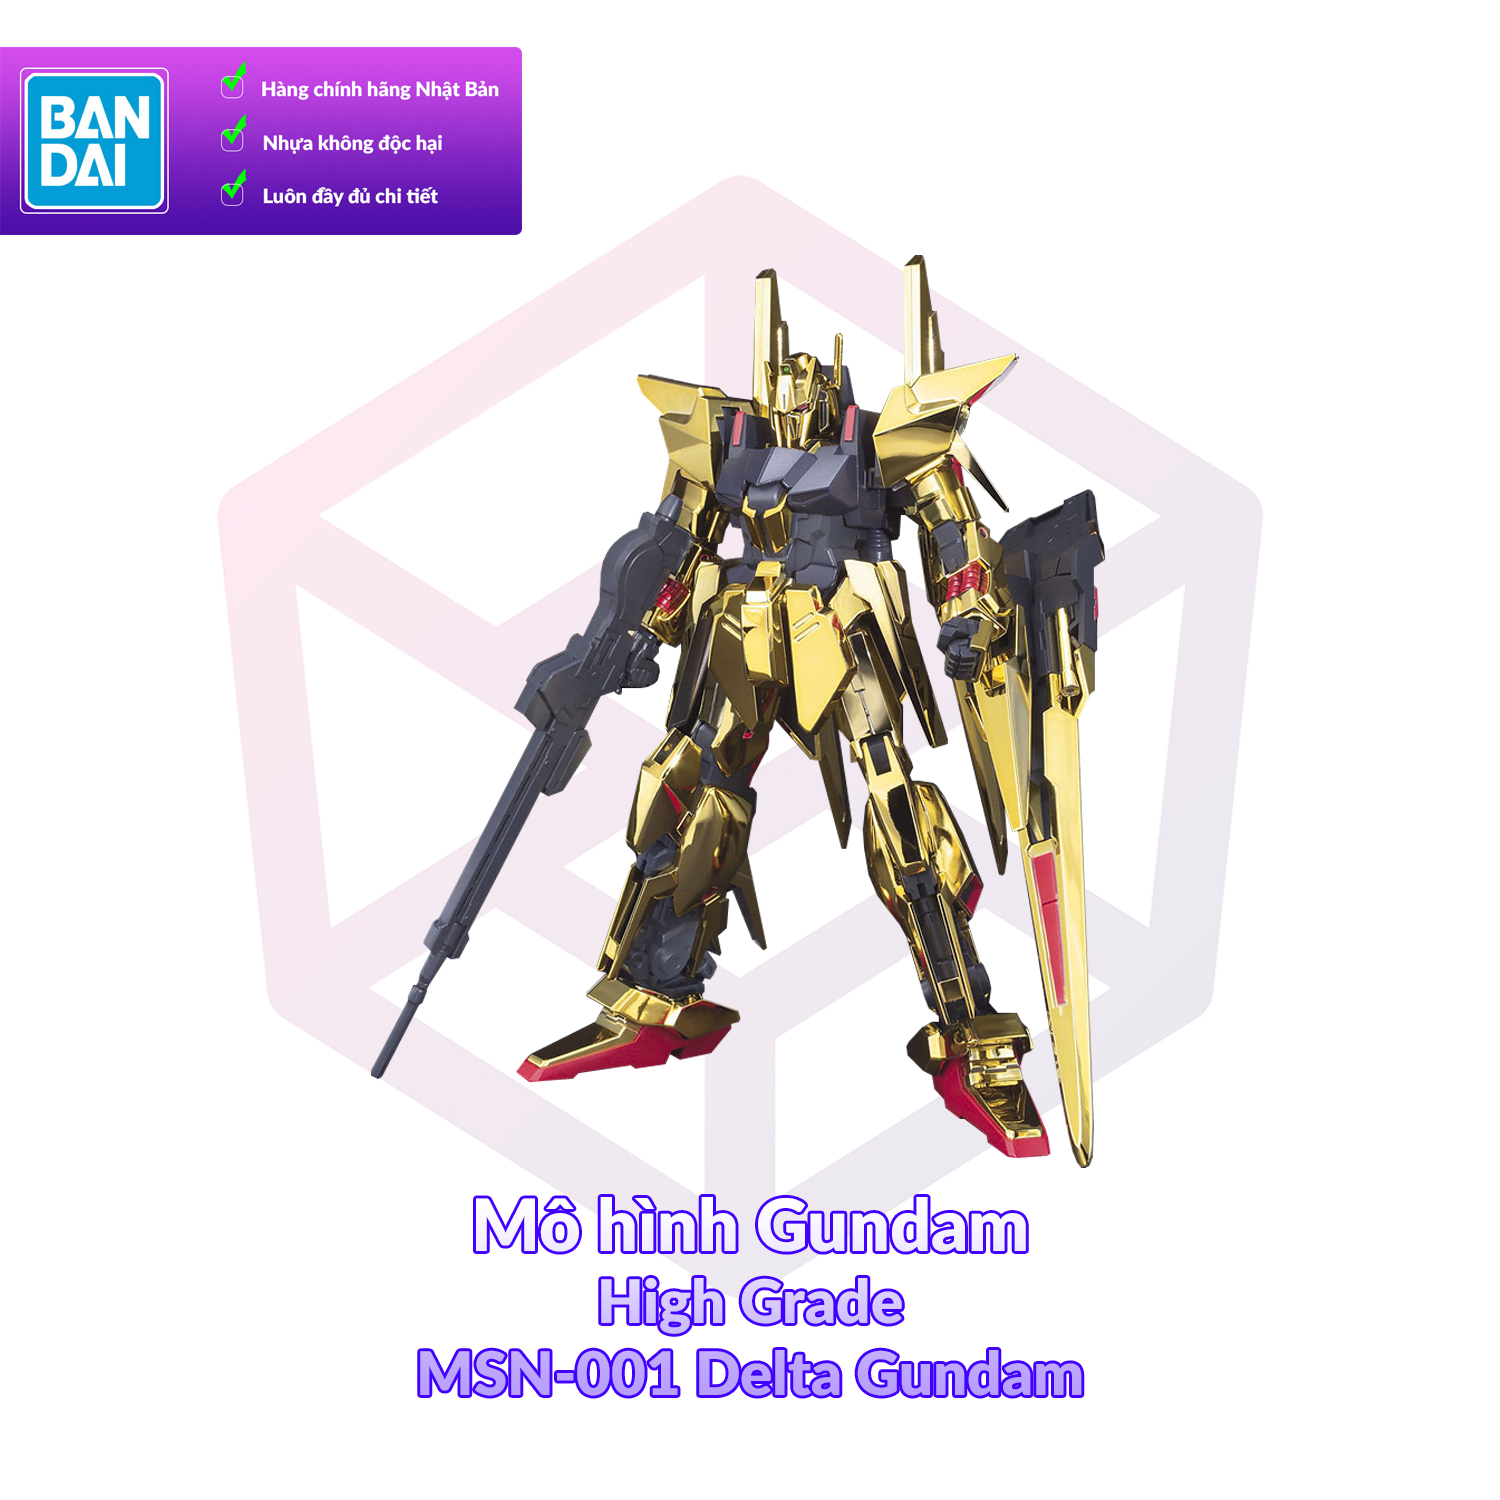 7-11 12 VOUCHER 8%Mô hình Gundam Bandai HG MSN-001 Delta Gundam 1 144 MS